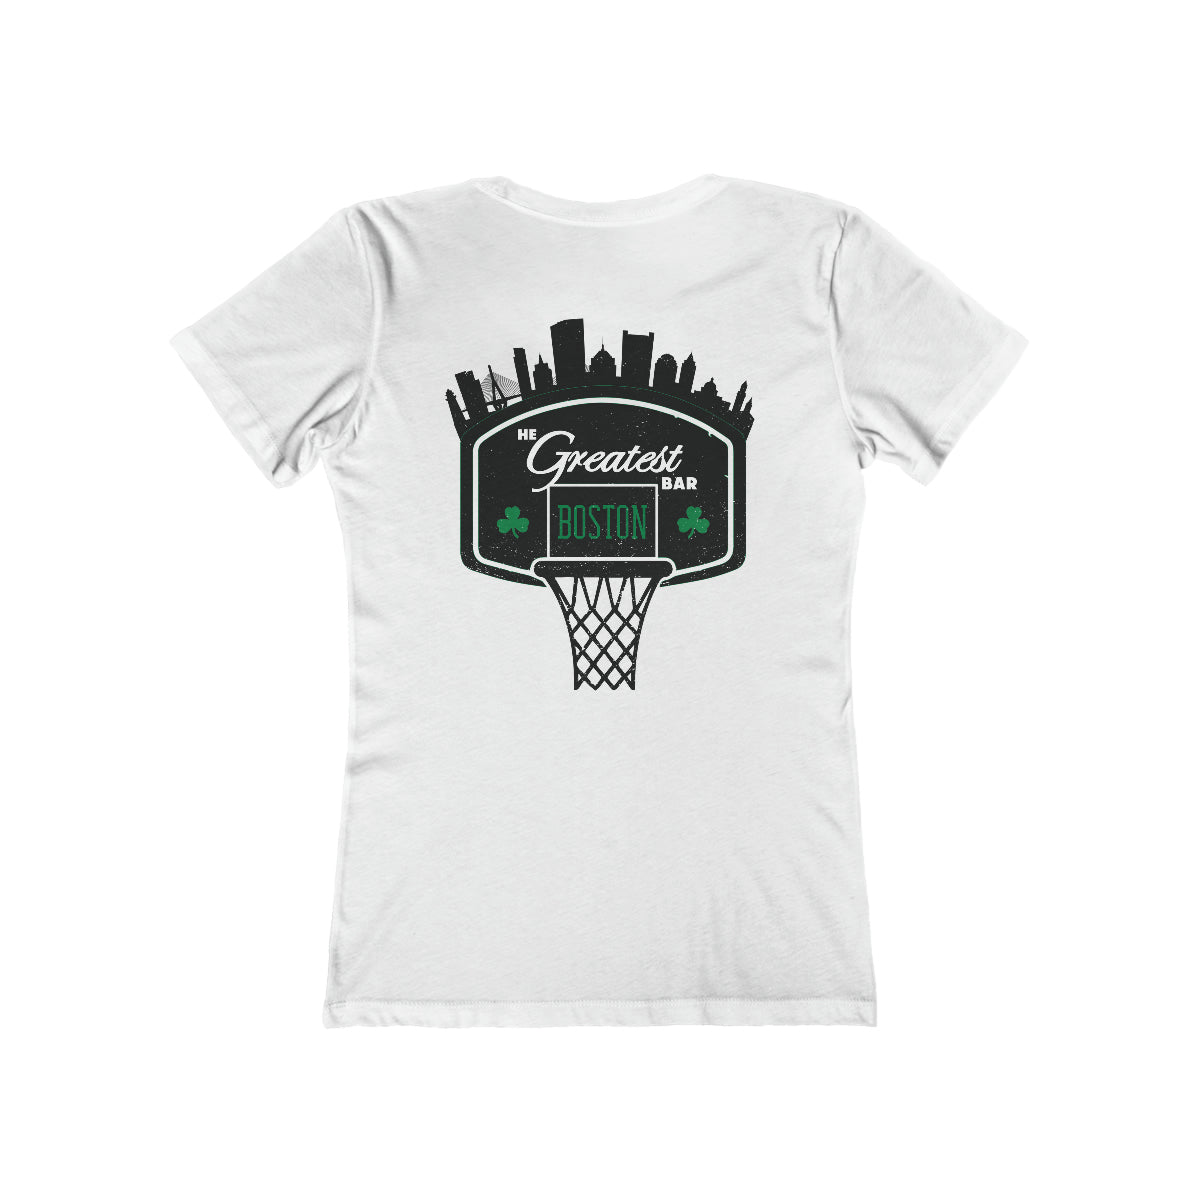 The Greatest Bar Womens T-Shirt - Boston Basketball